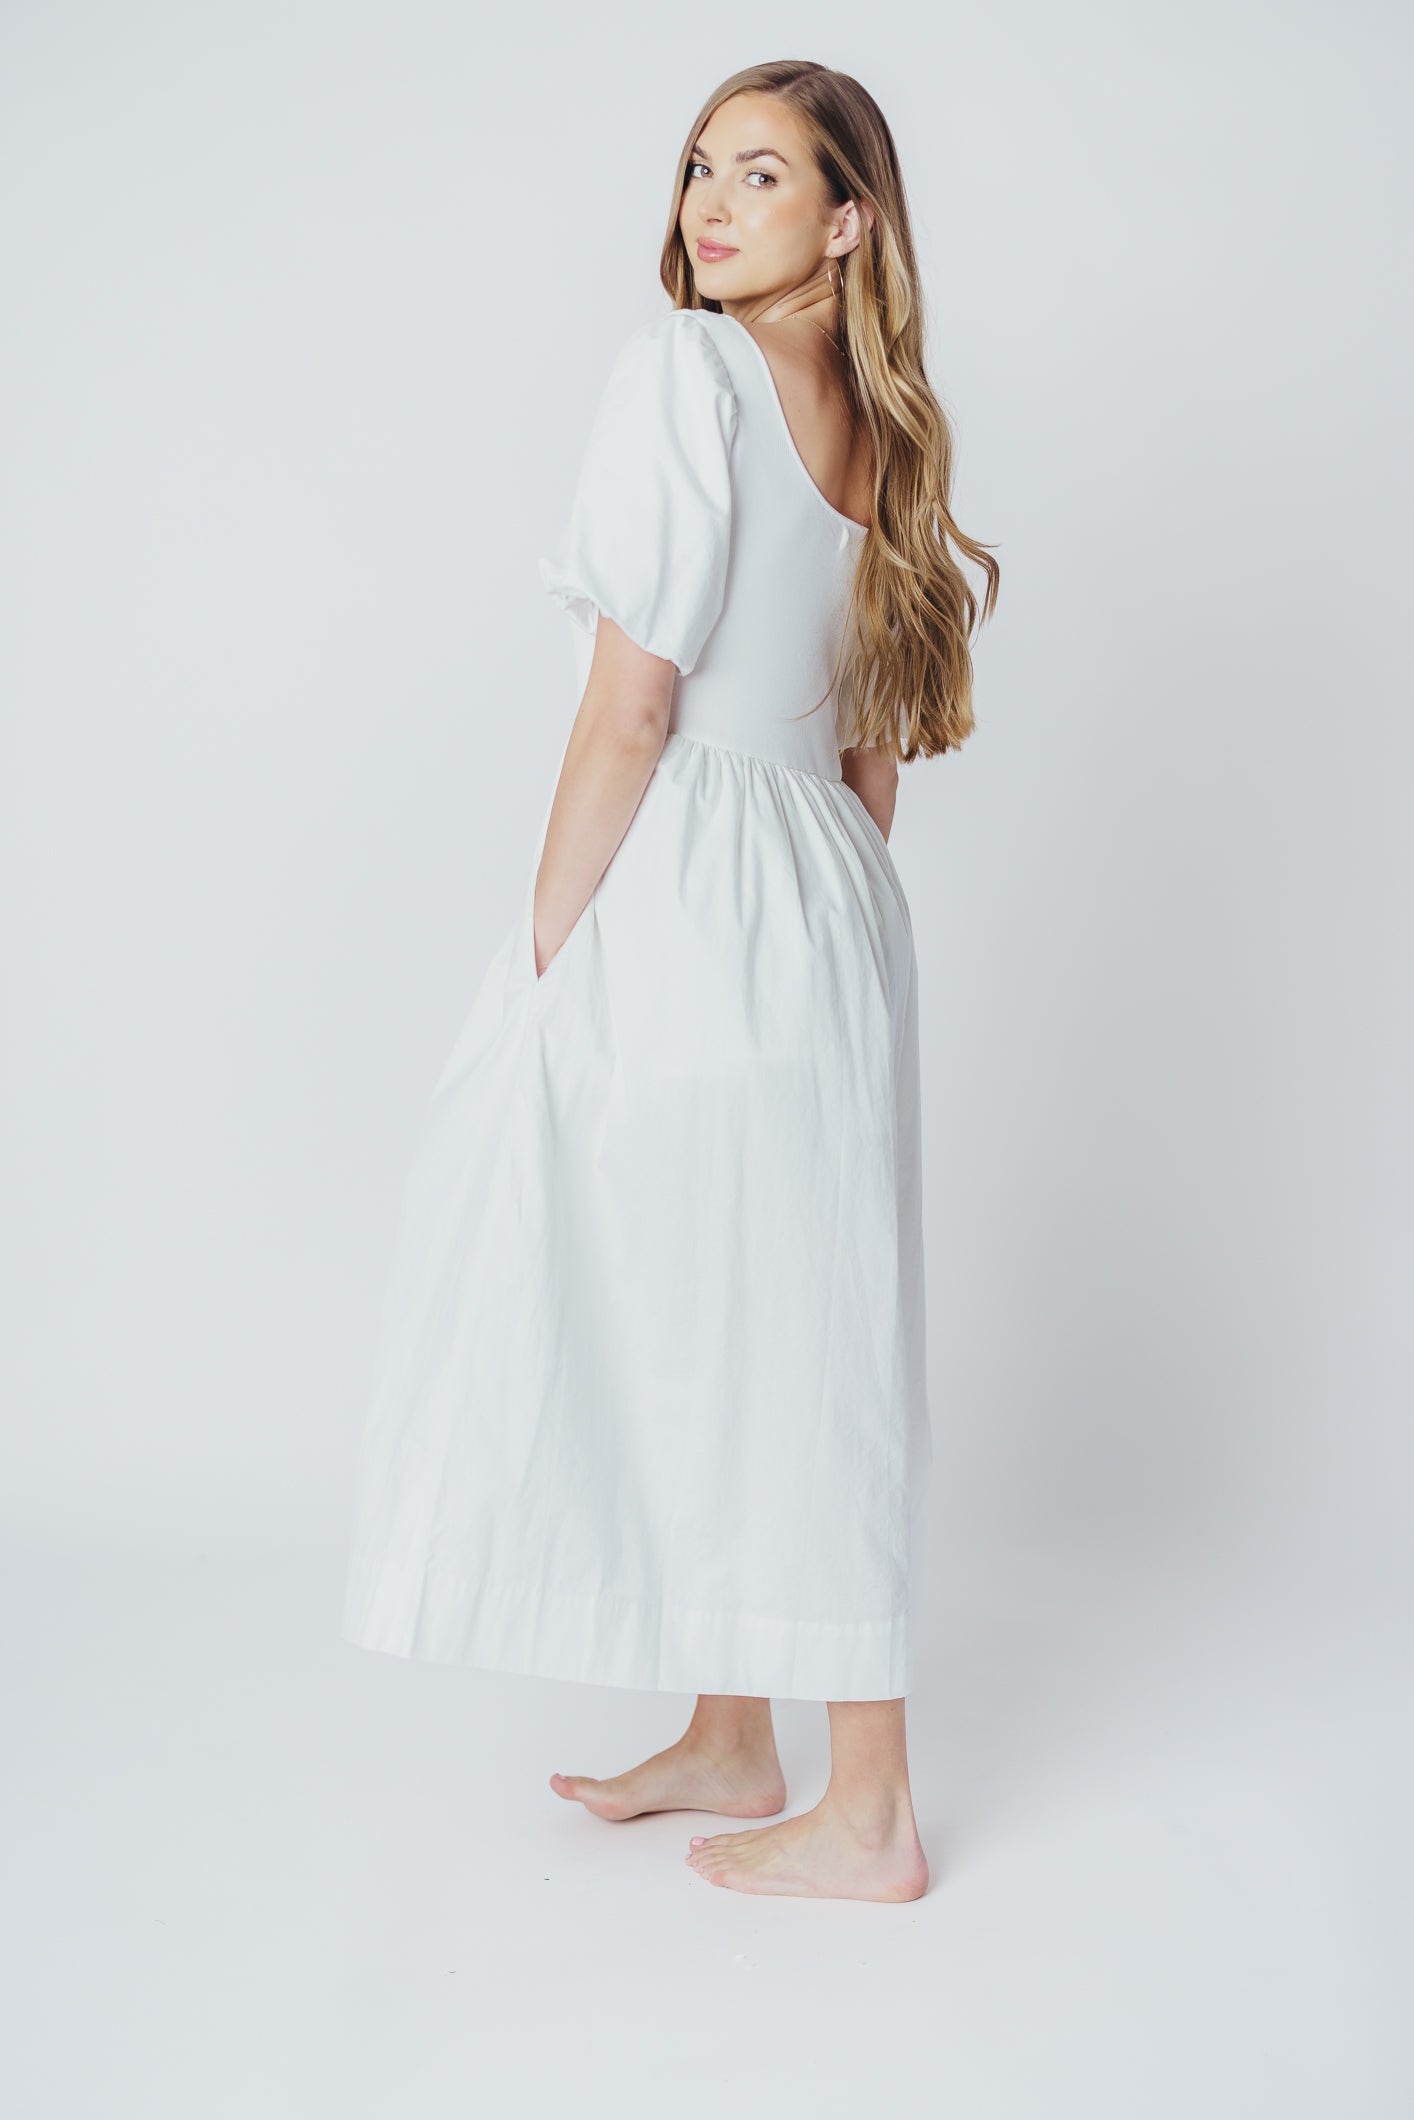 The Premium Alana Midi Dress in White